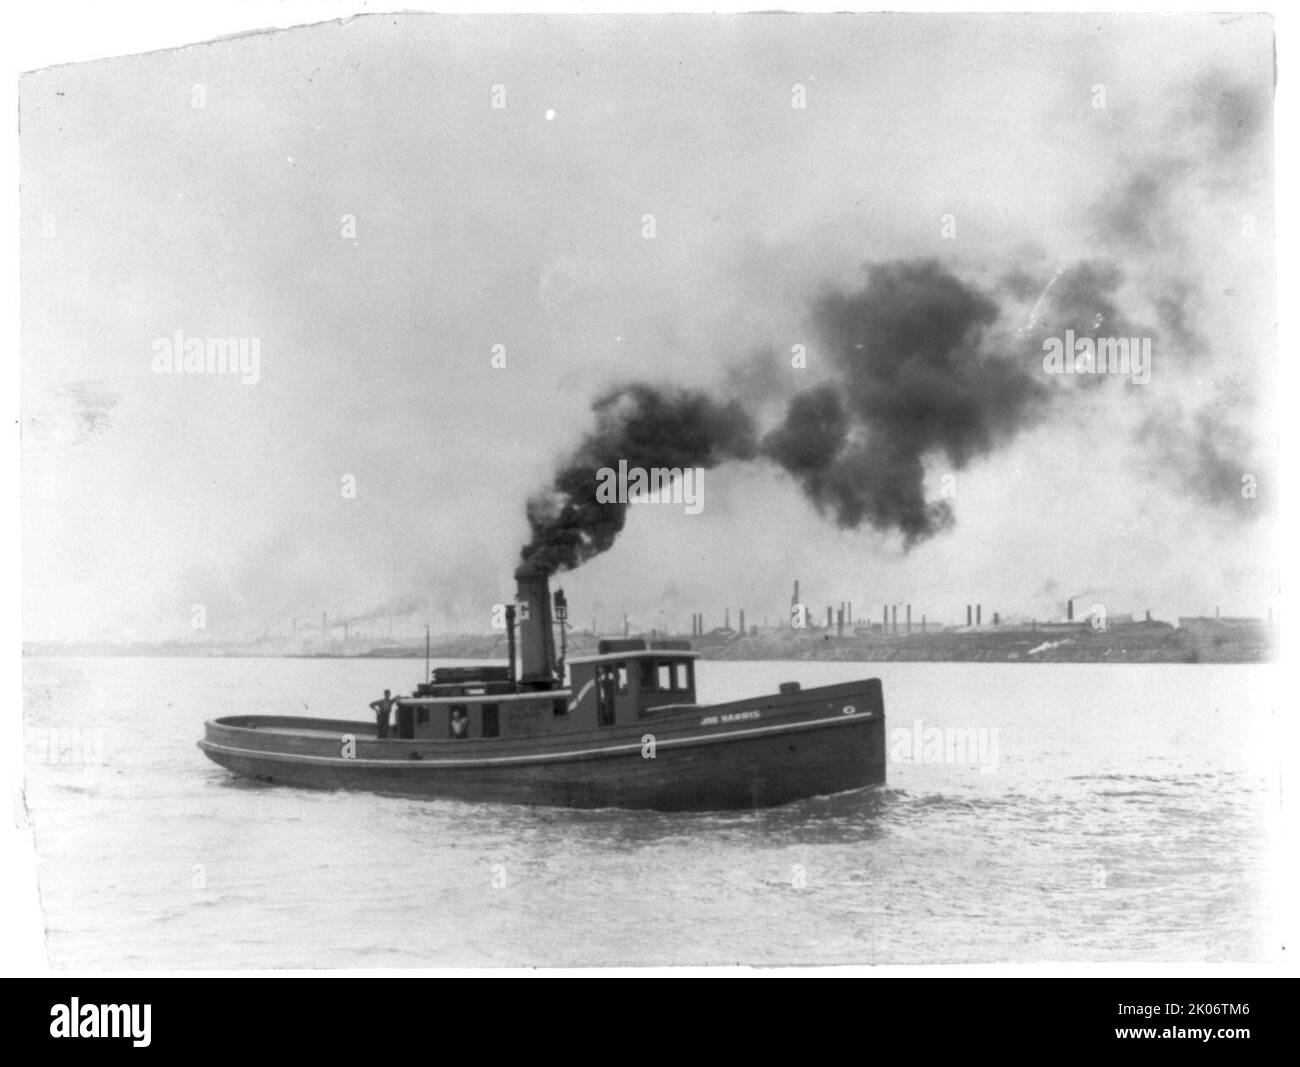 A tug boat - Joe Harris, 1903. Stock Photo